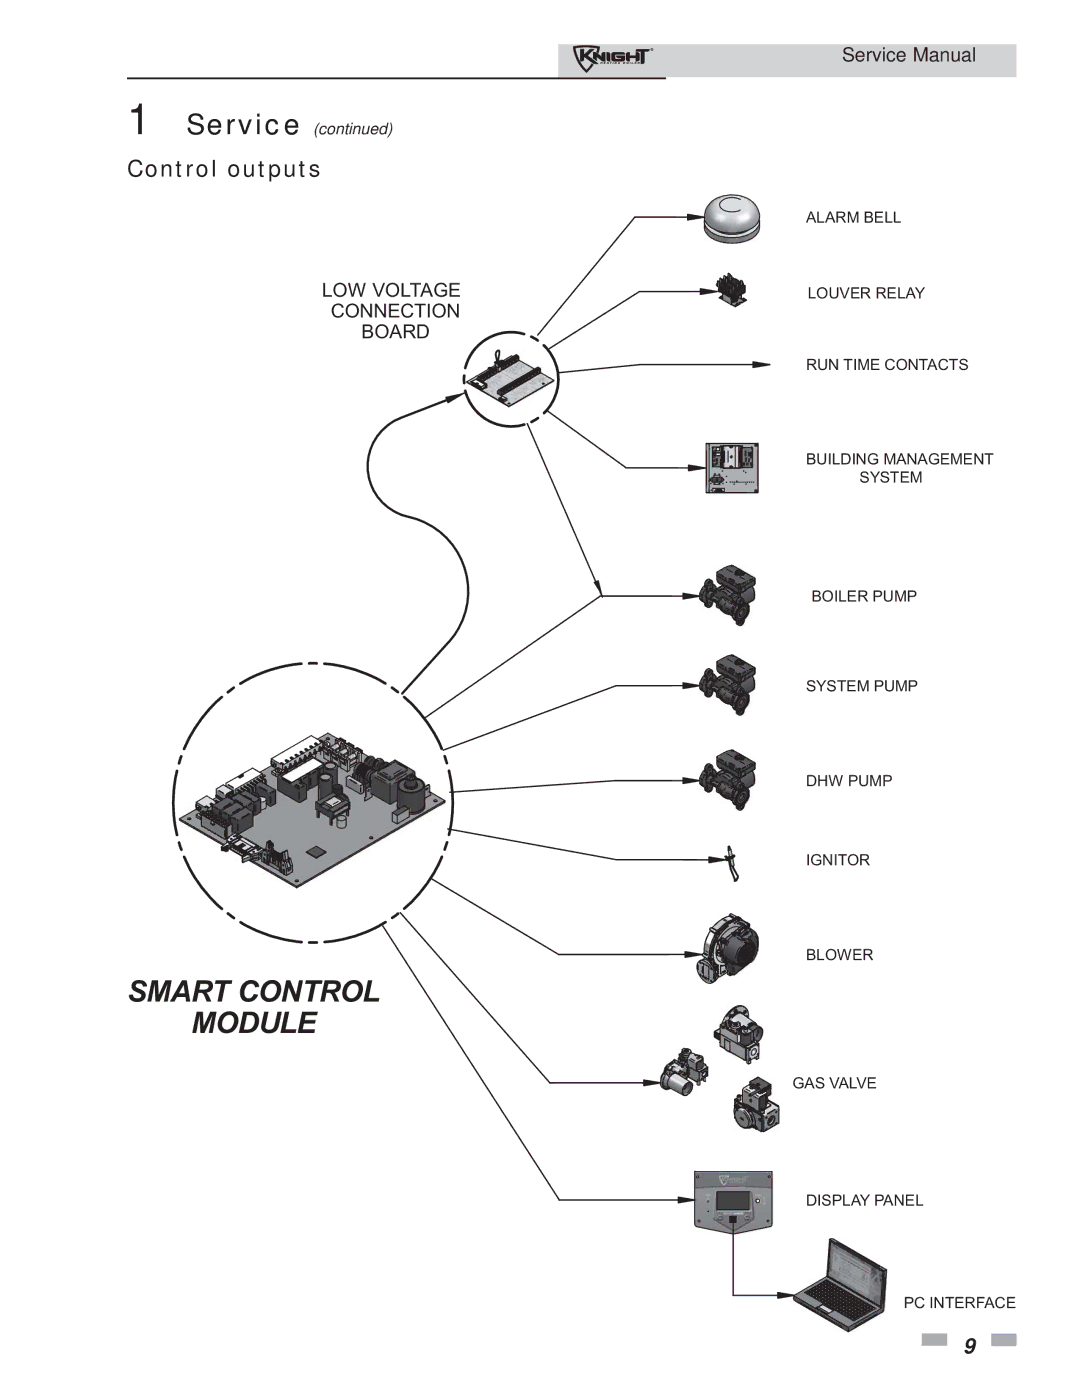 Lochinvar 81-286 service manual Smart Control Module, Control outputs 